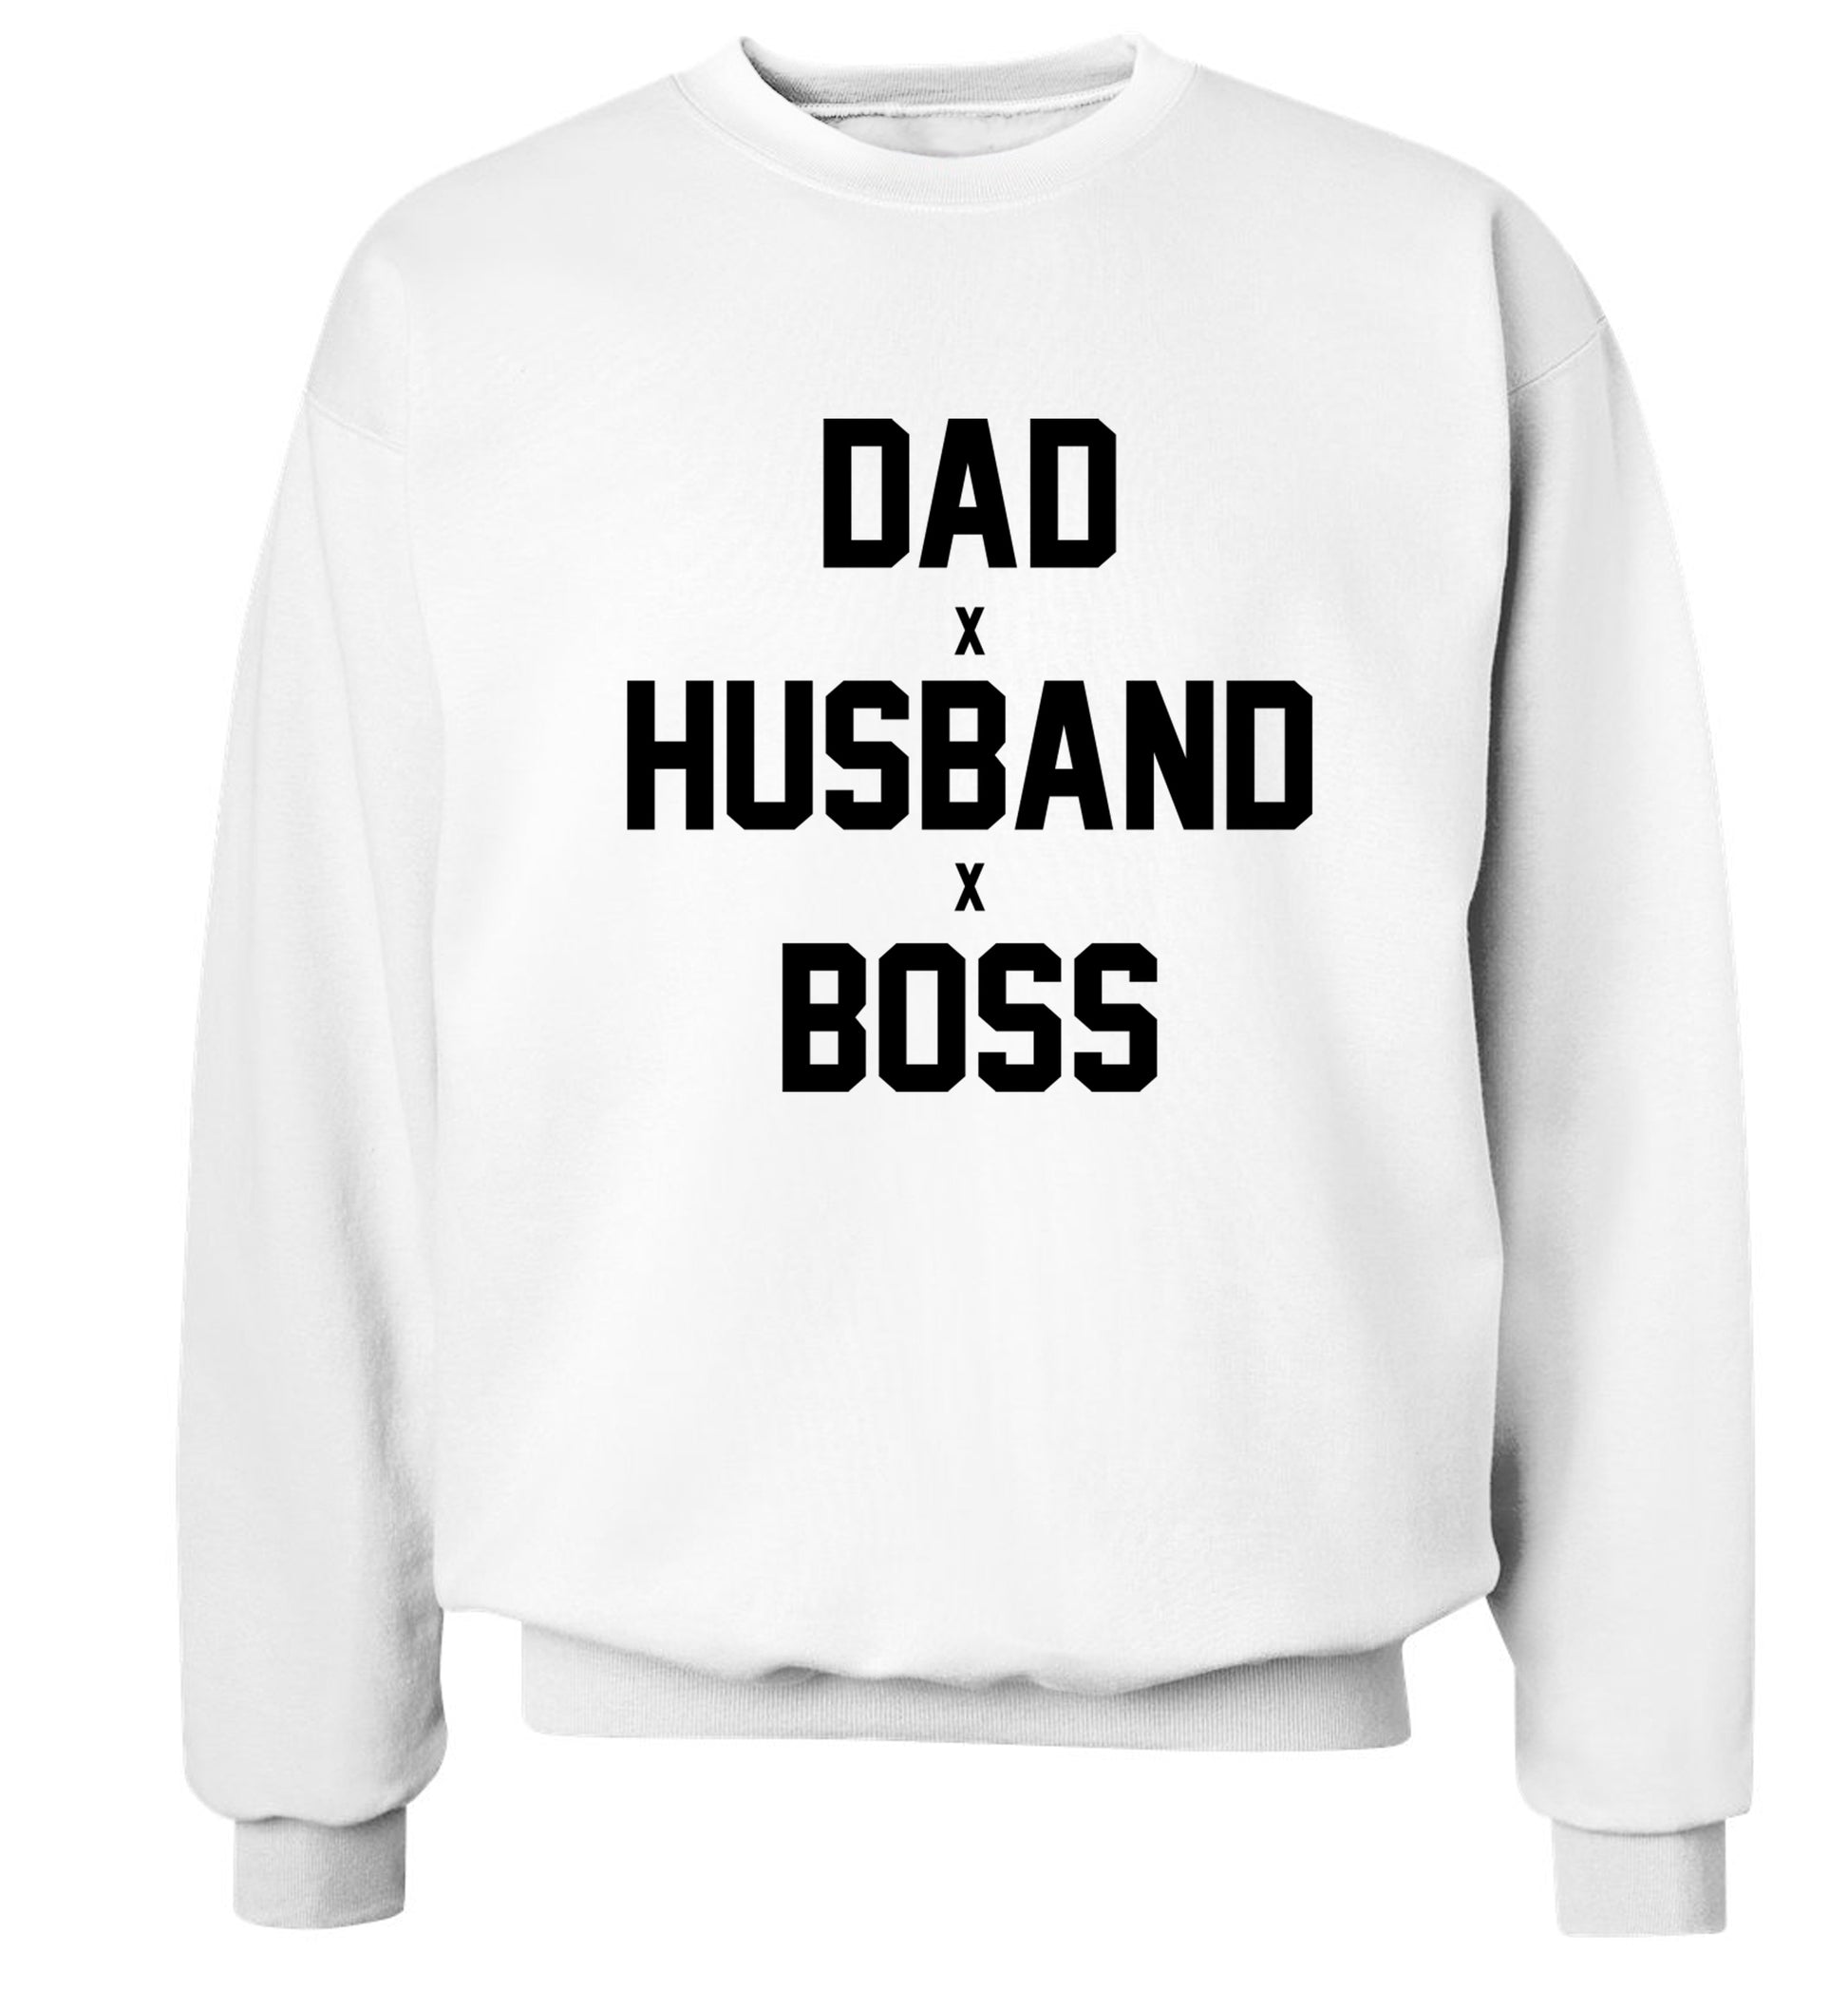 Dad husband boss Adult's unisex white Sweater 2XL